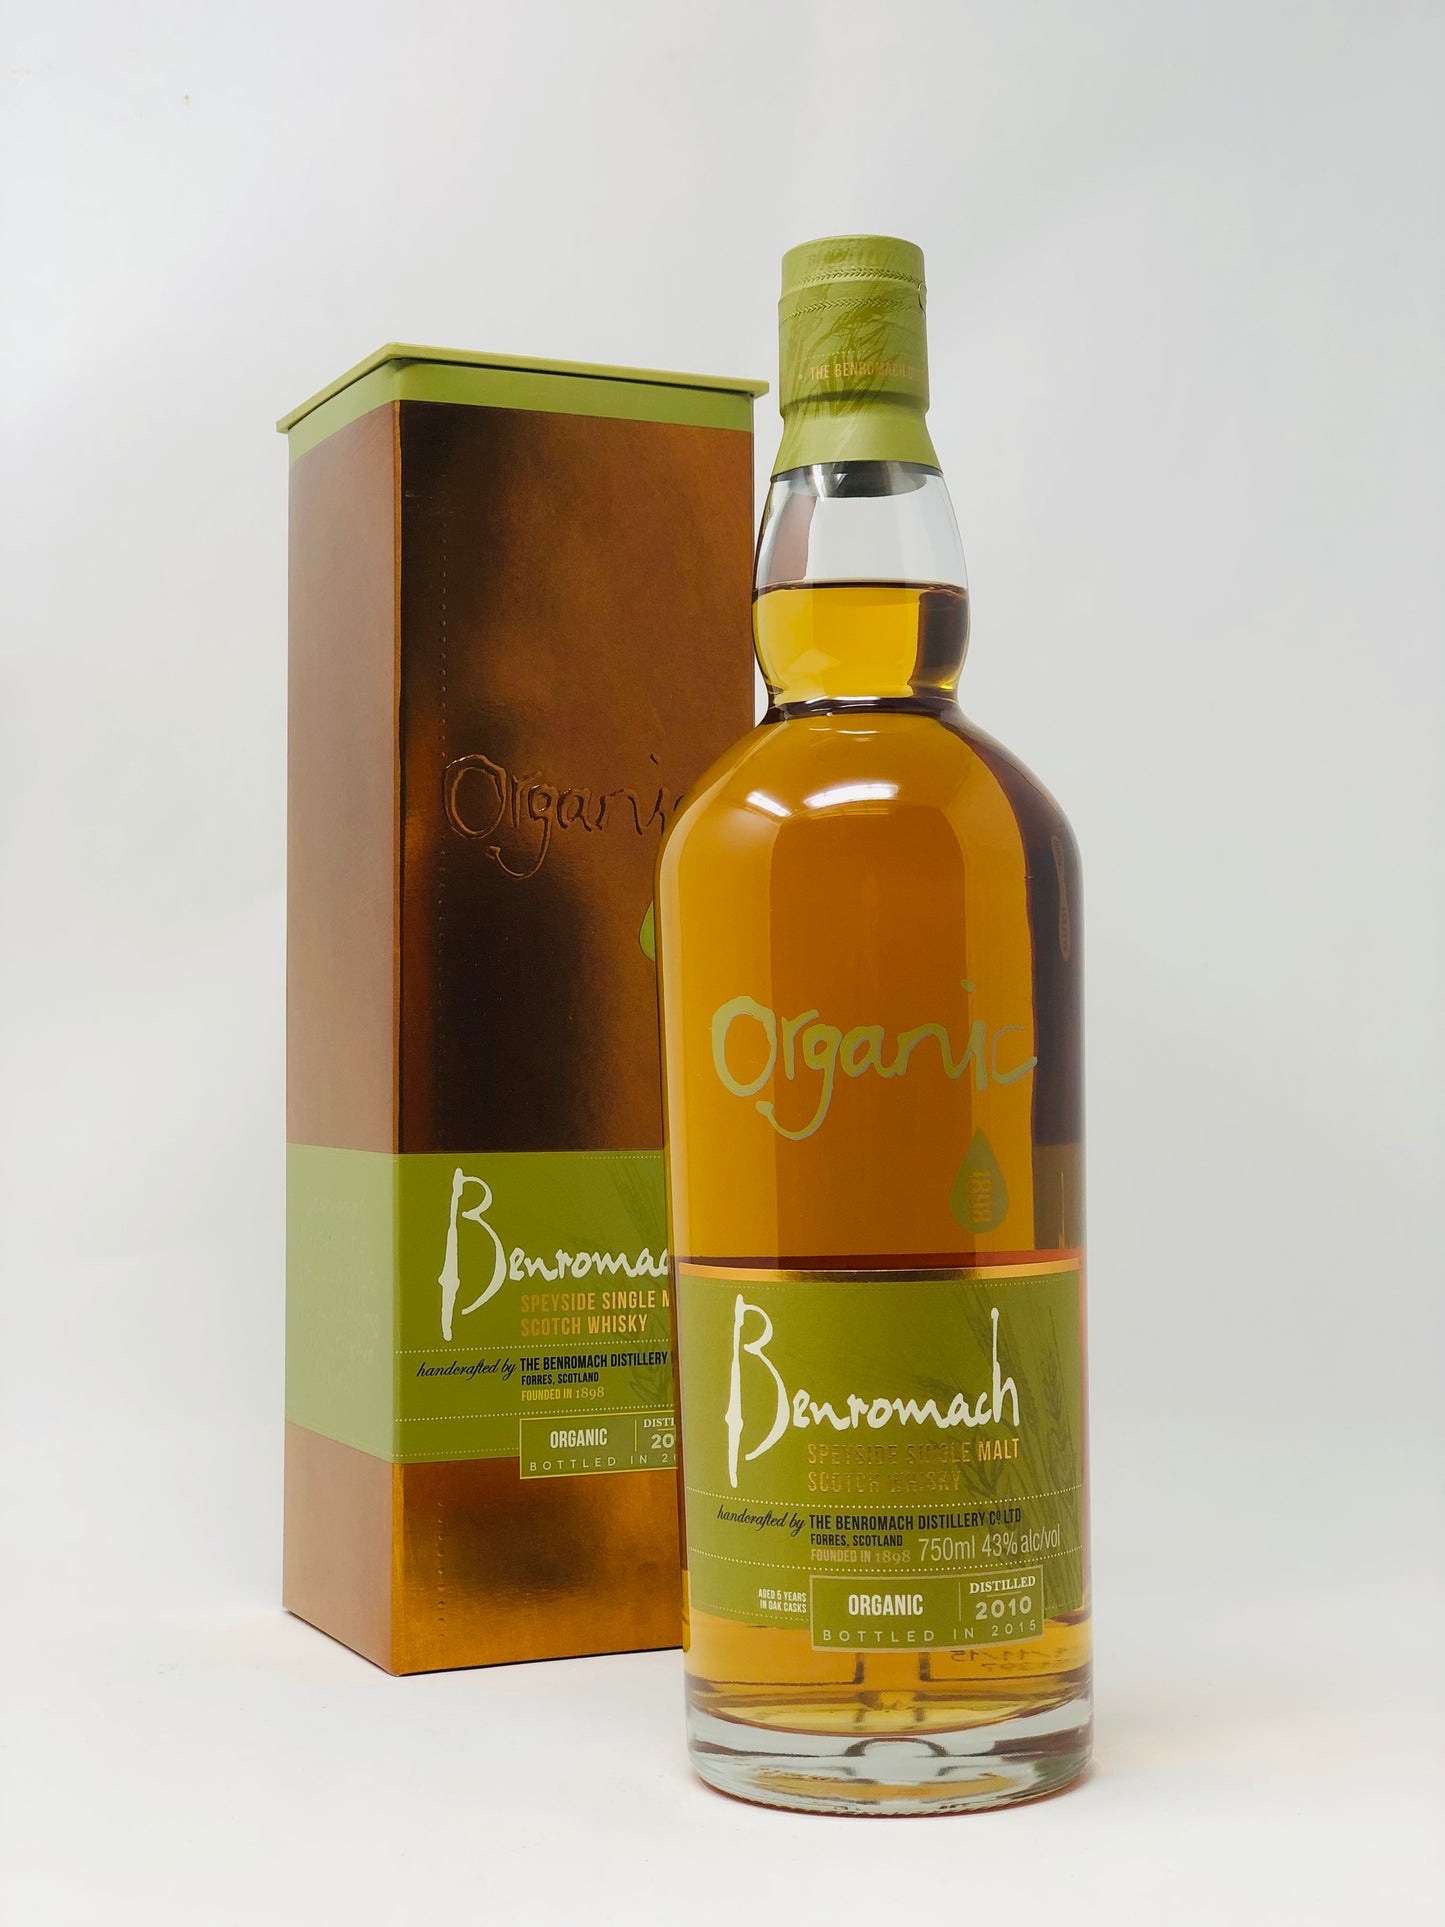 Benromach, 2010 Organic Speyside Single Malt Scotch Whisky 86 Proof